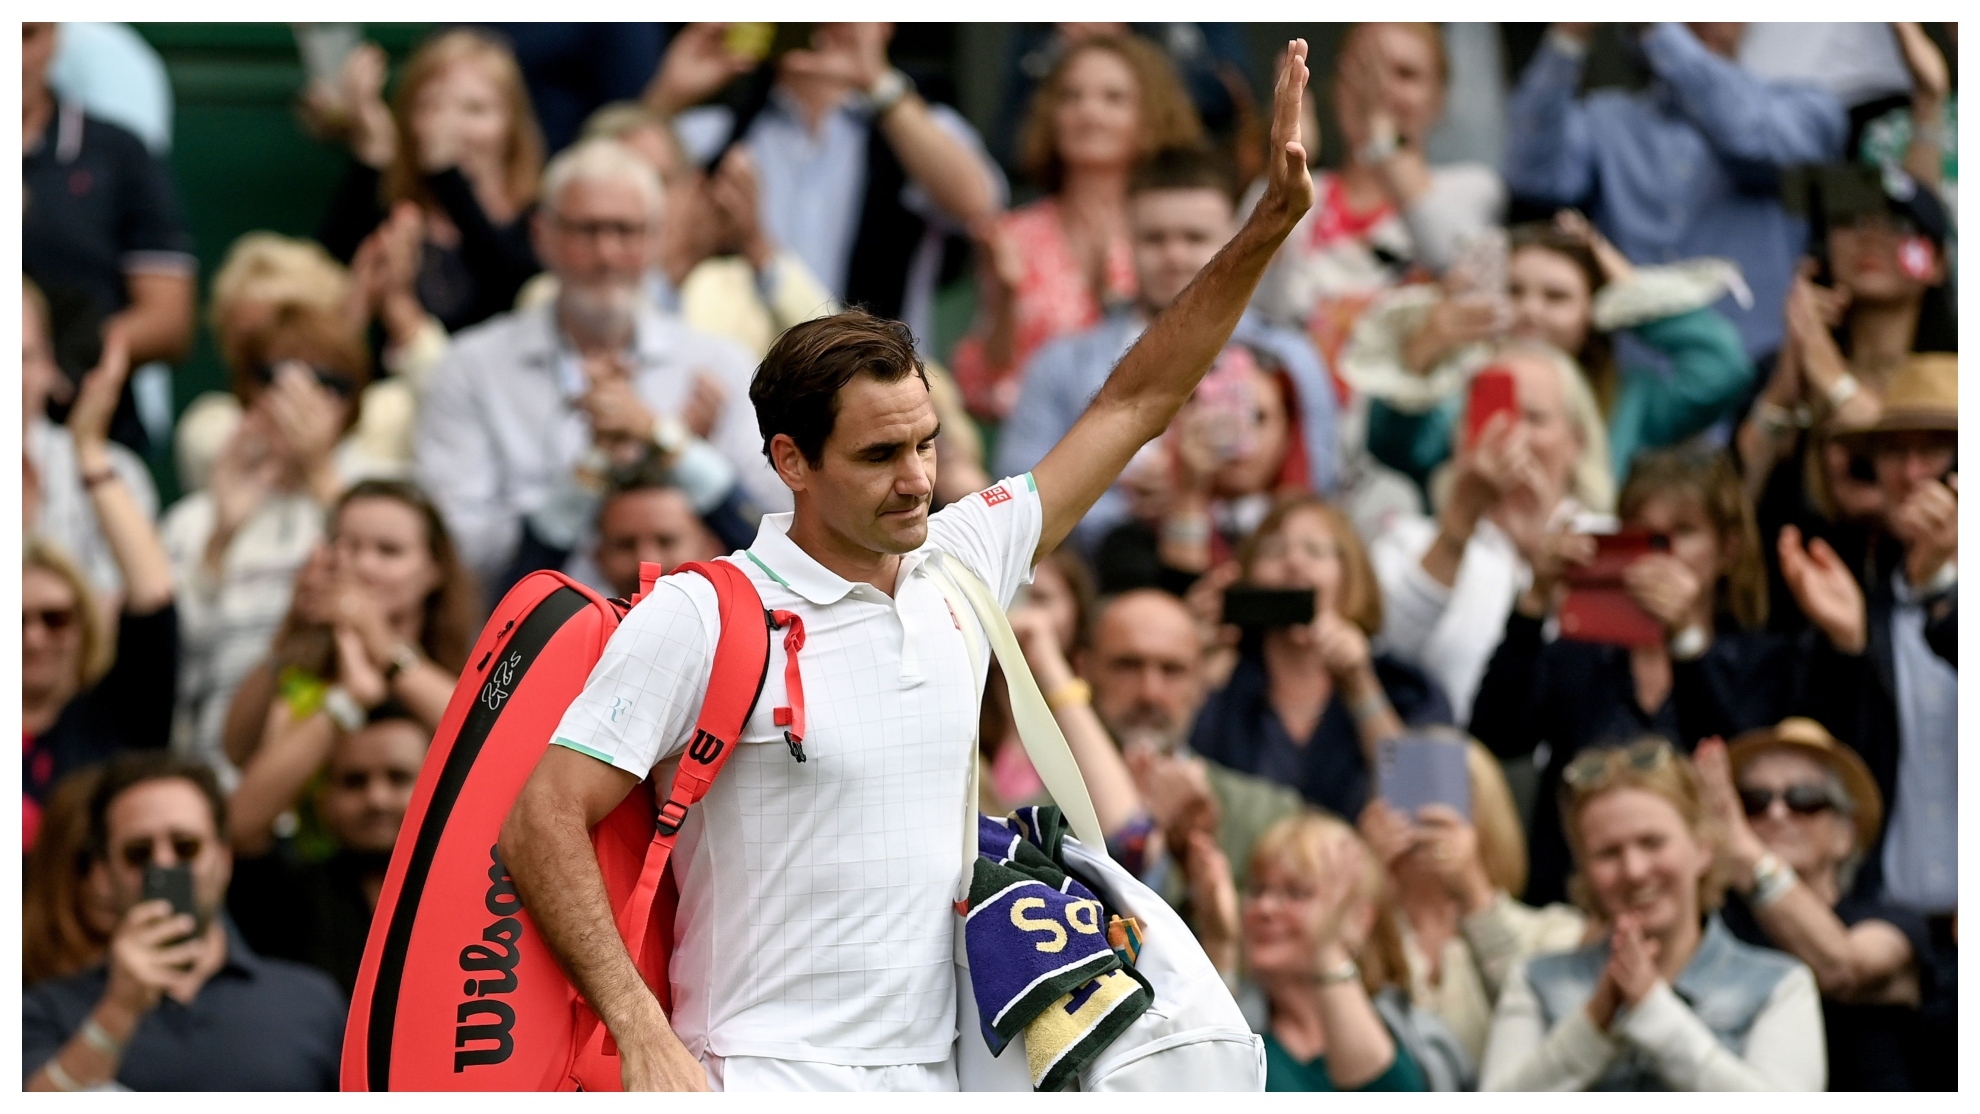 Roger Federer saludo al público tras perder frente a Hubert Hurkacz en los cuartos de final de Wimbledon en 2021.